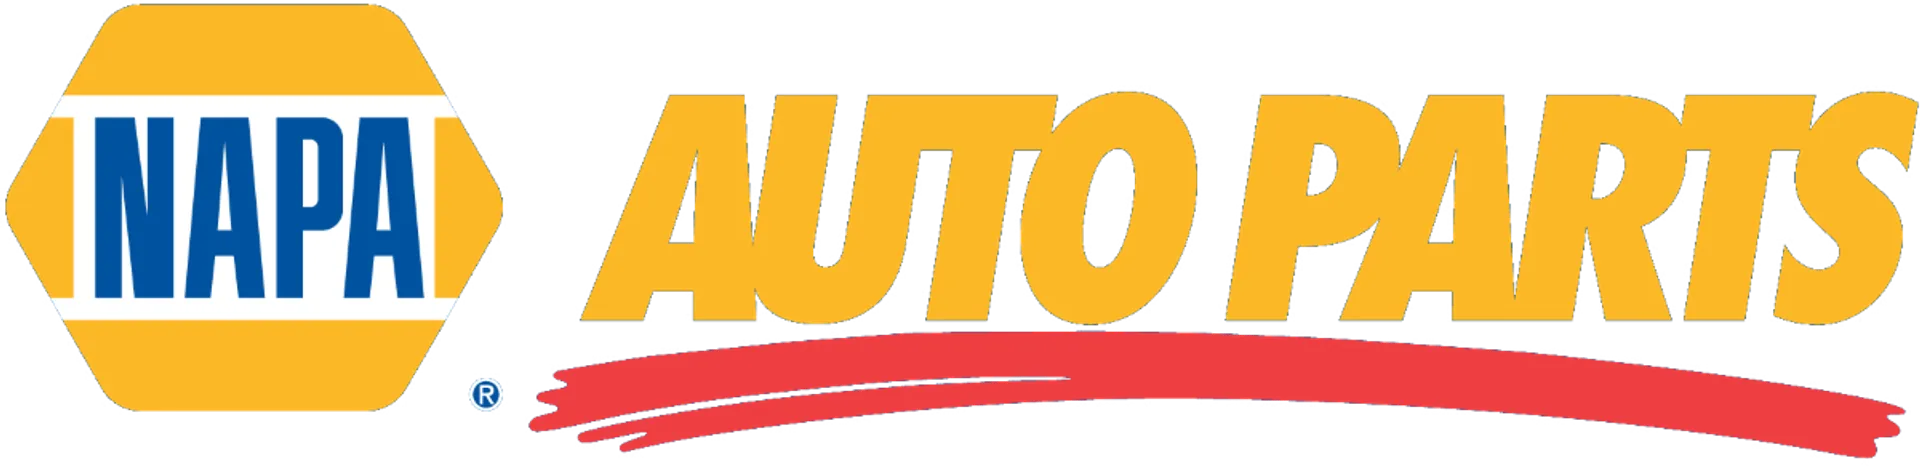 NAPA AUTO PARTS logo